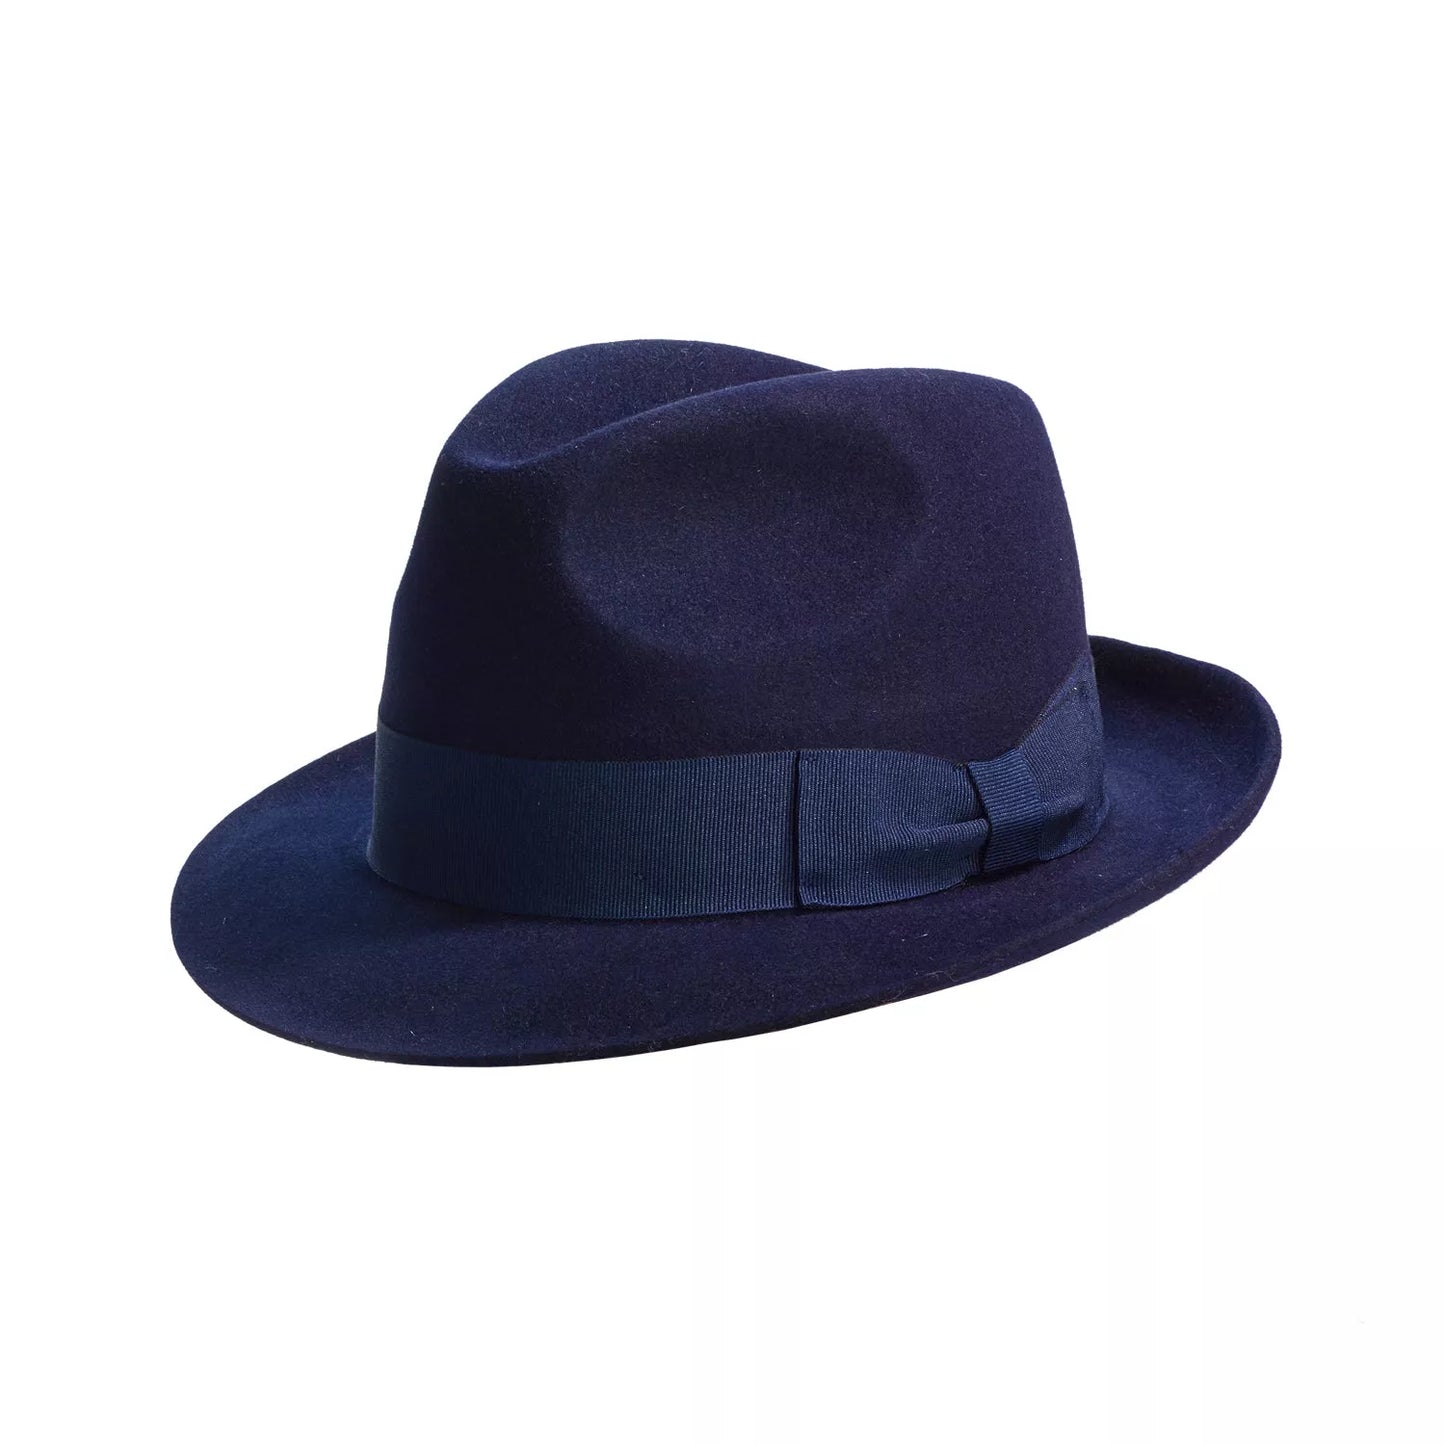 Sinatra Trilby Hat